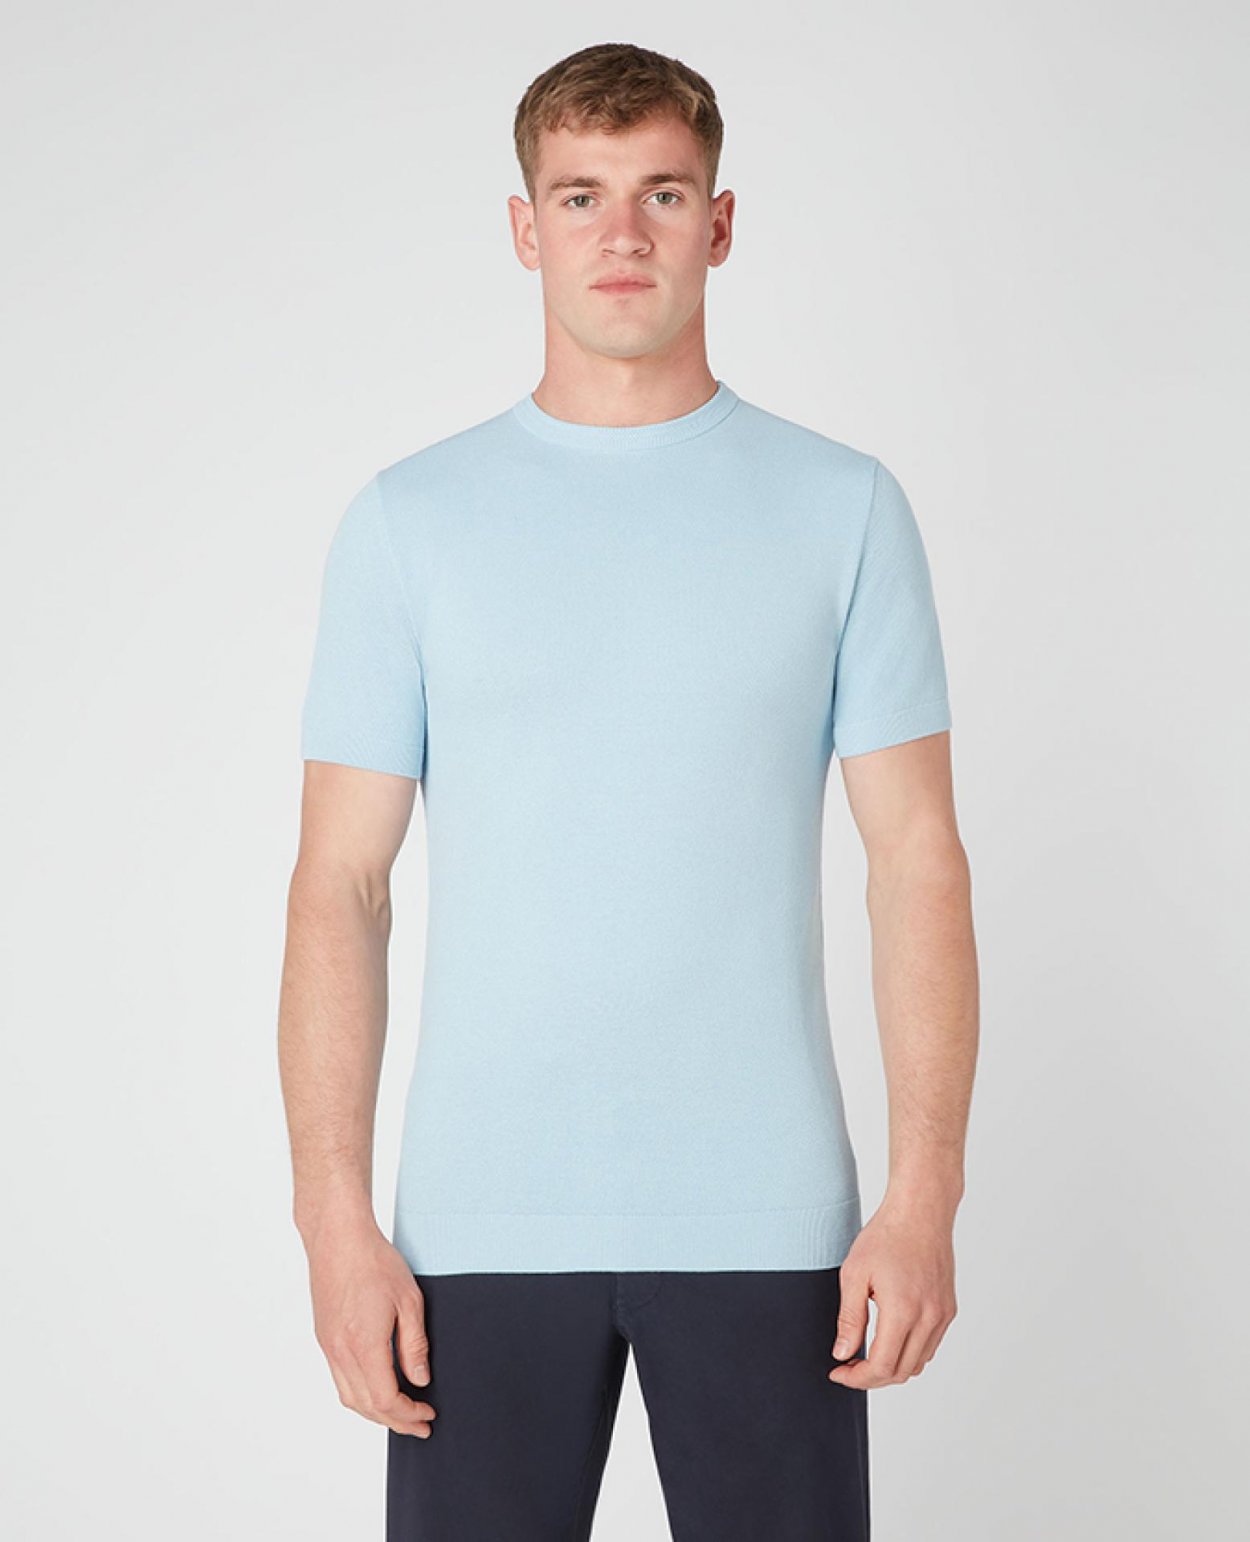 Pánské modré bavlněné tričko Remus Uomo